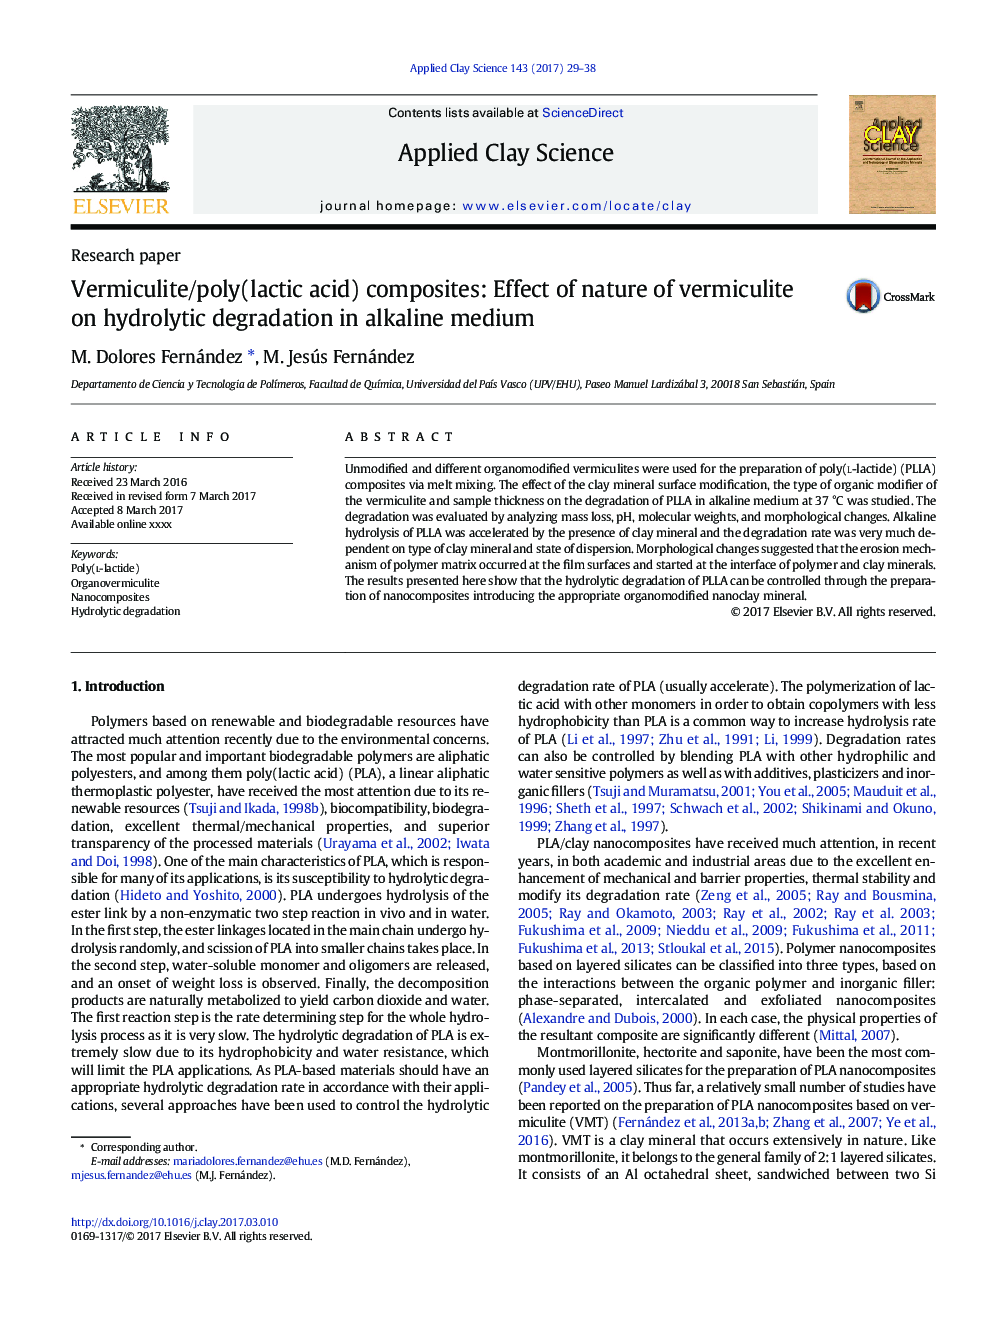 کامپوزیت های ورمیکولیت / پلی (اسید لاکتیک): اثر طبیعت ورمیکولیت بر تخریب هیدرولیتیک در محیط قلیایی 